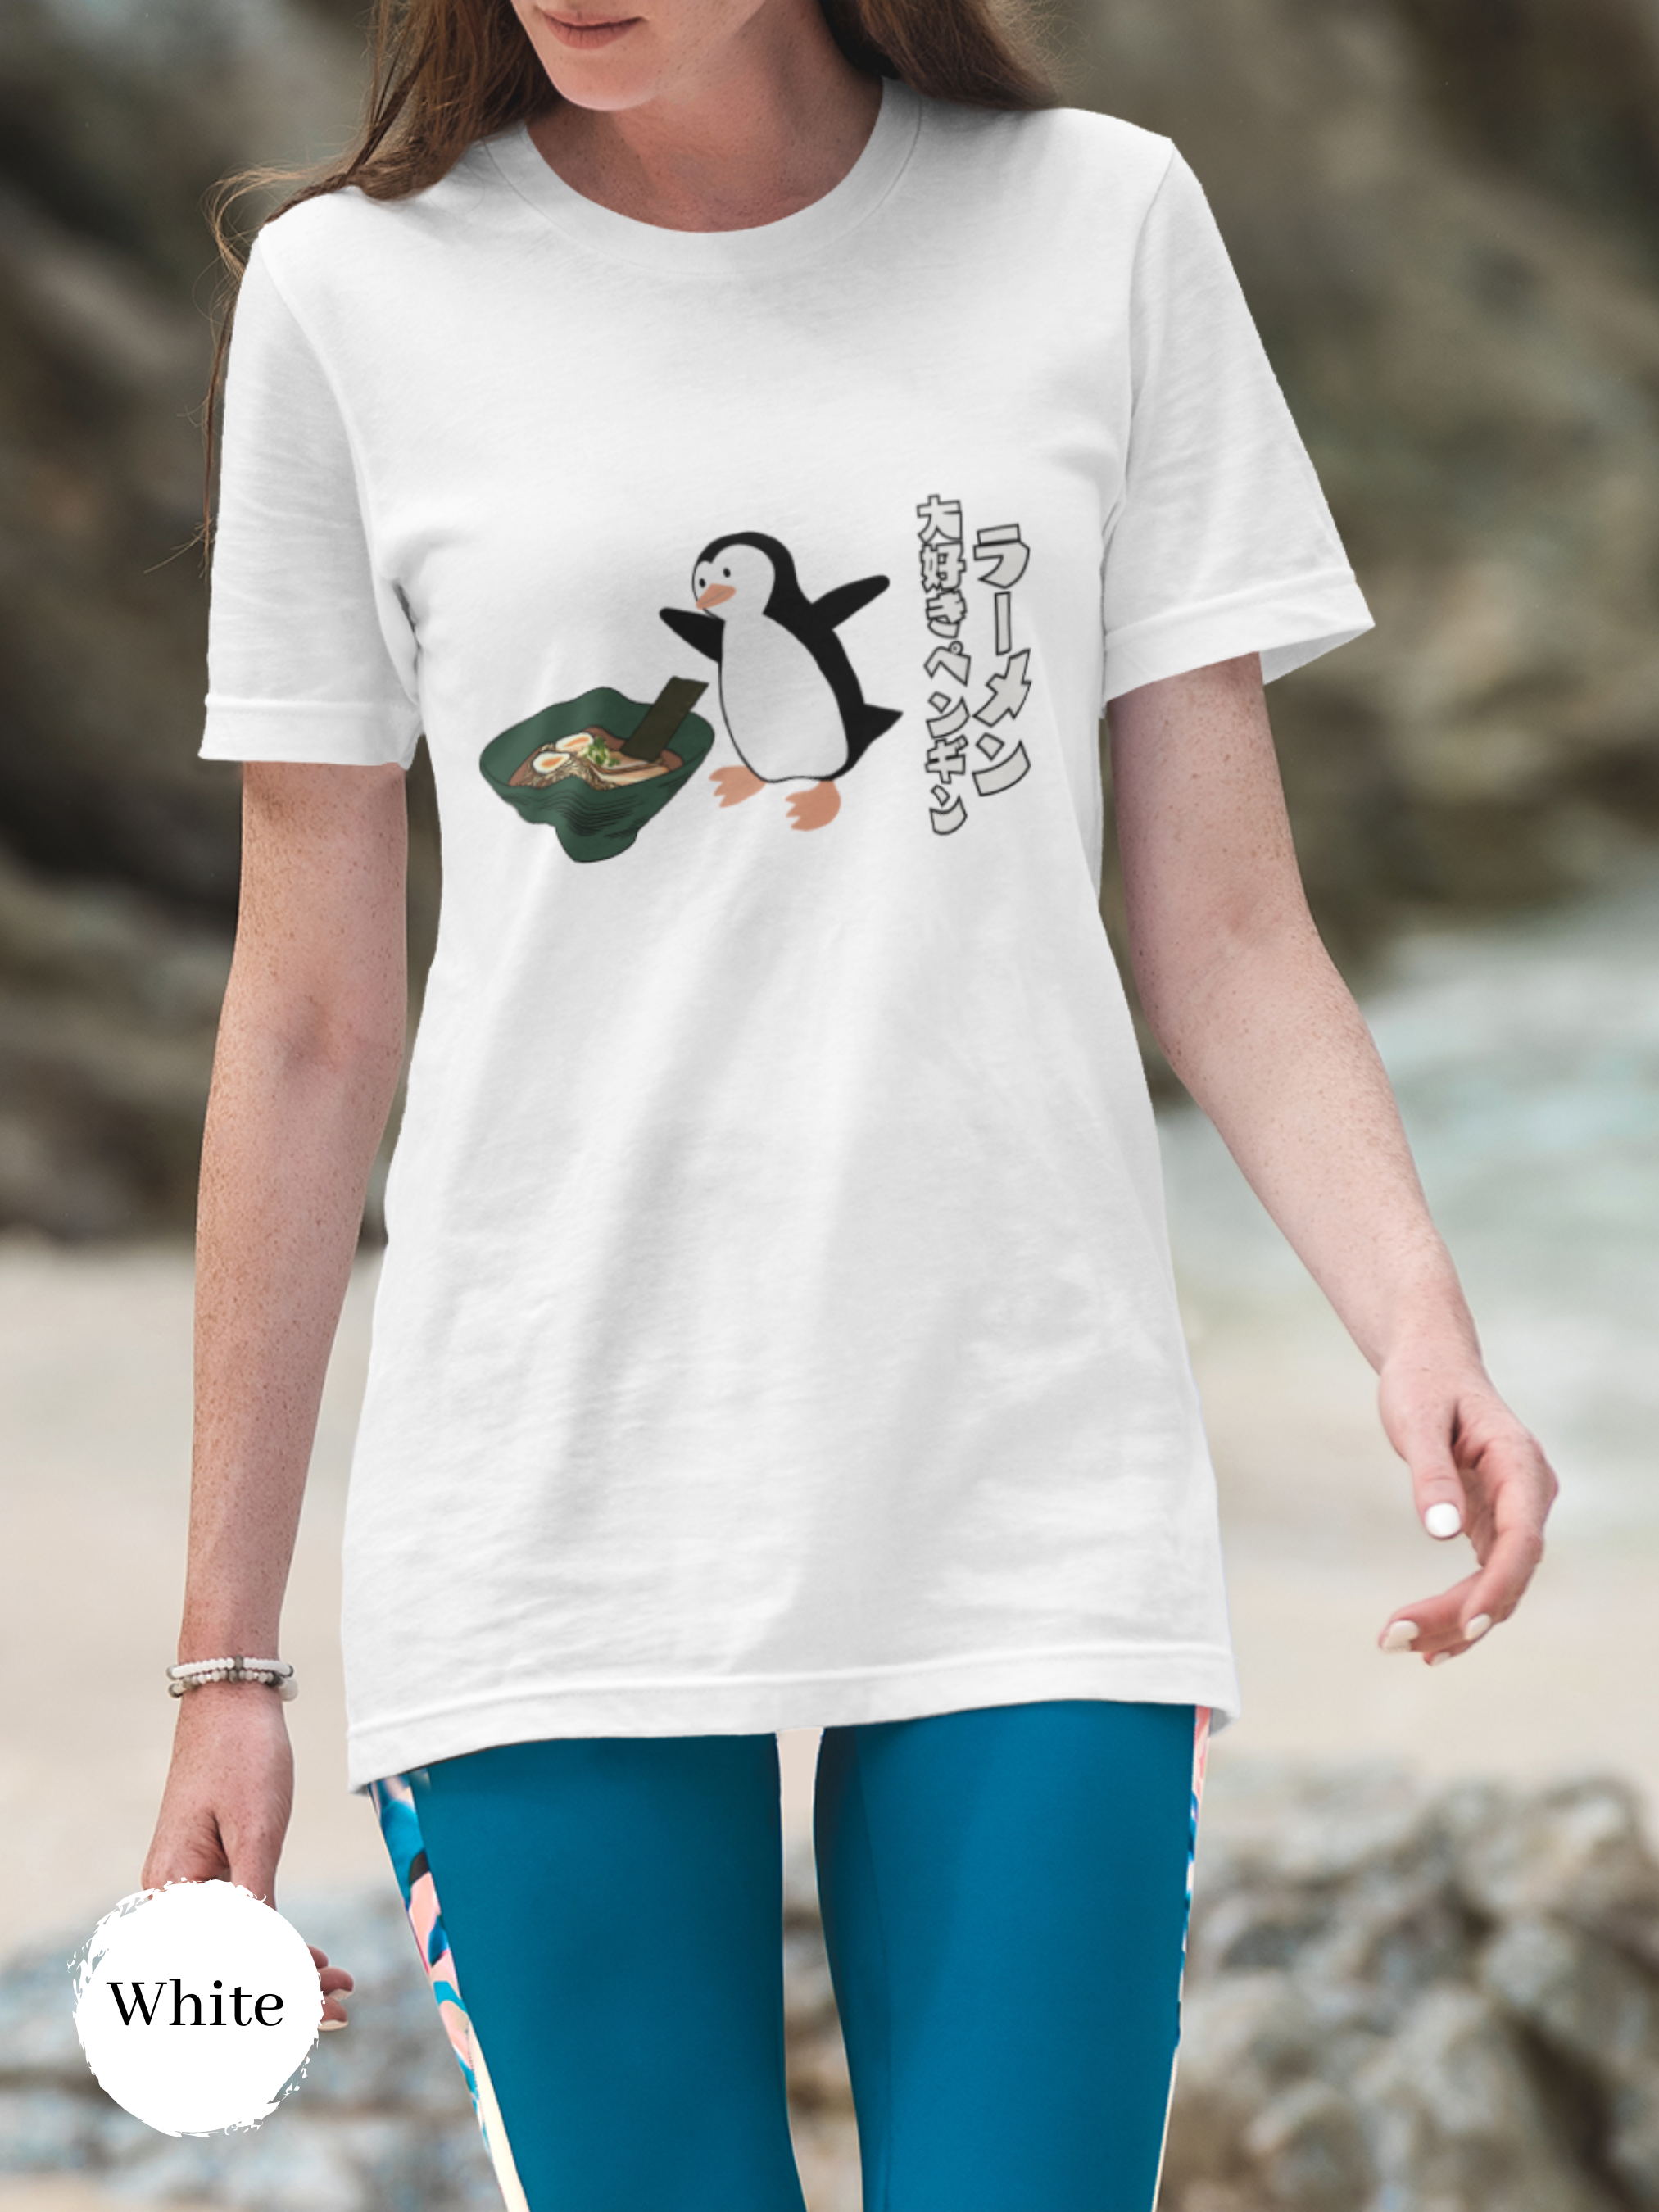 Penguin Ramen T-shirt: Embrace Japanese Cuisine with the Ramen-Loving Penguin - A Foodie Shirt Featuring Vibrant Ramen Art